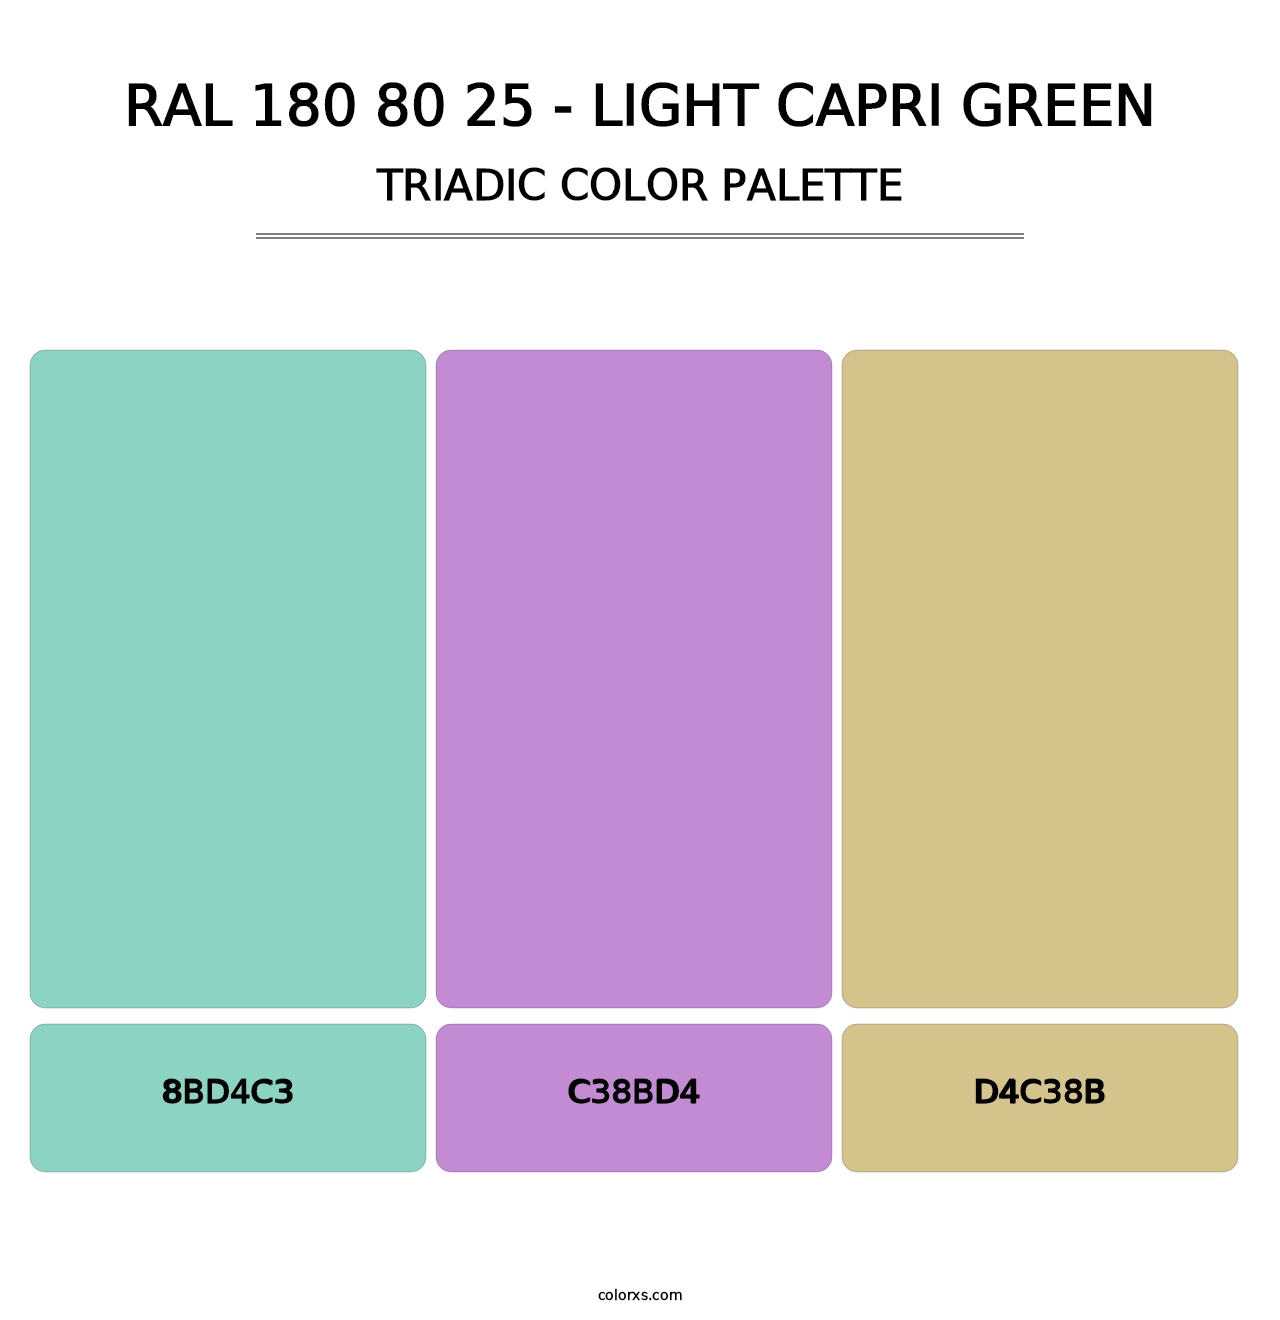 RAL 180 80 25 - Light Capri Green - Triadic Color Palette